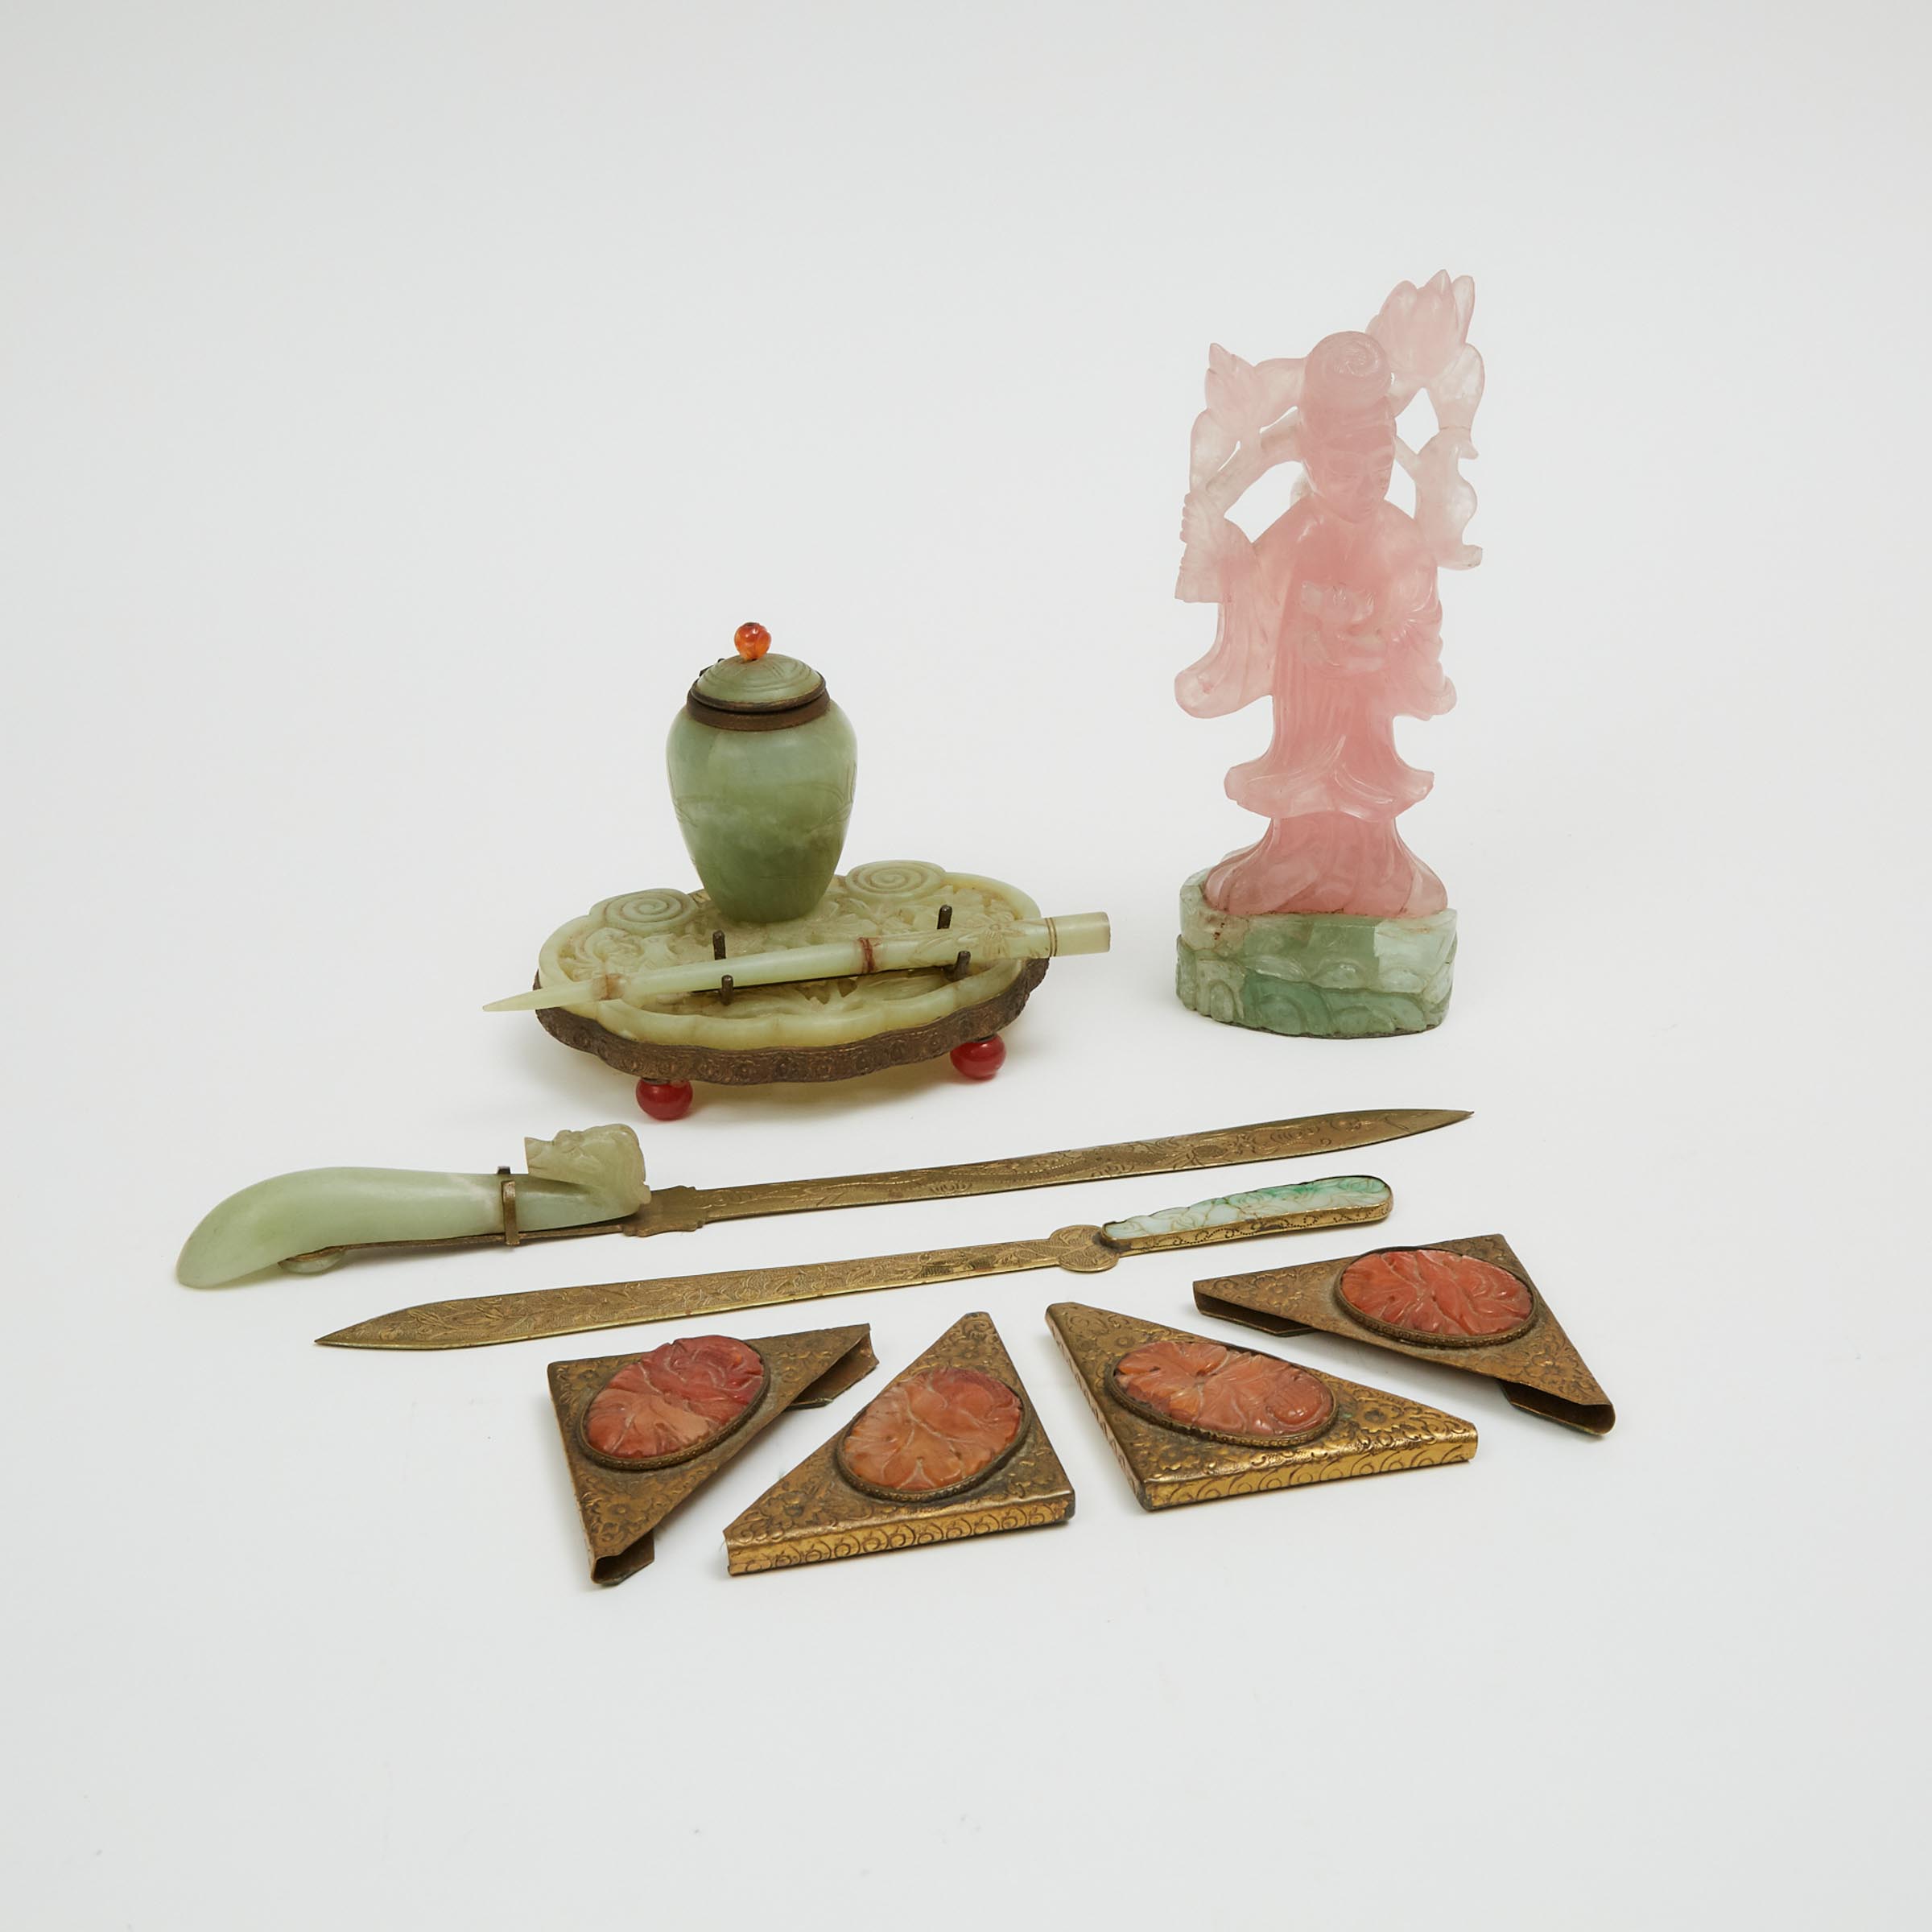 A Hardstone-Inset Stationery Set, together with a Rose Quartz Carved Figure